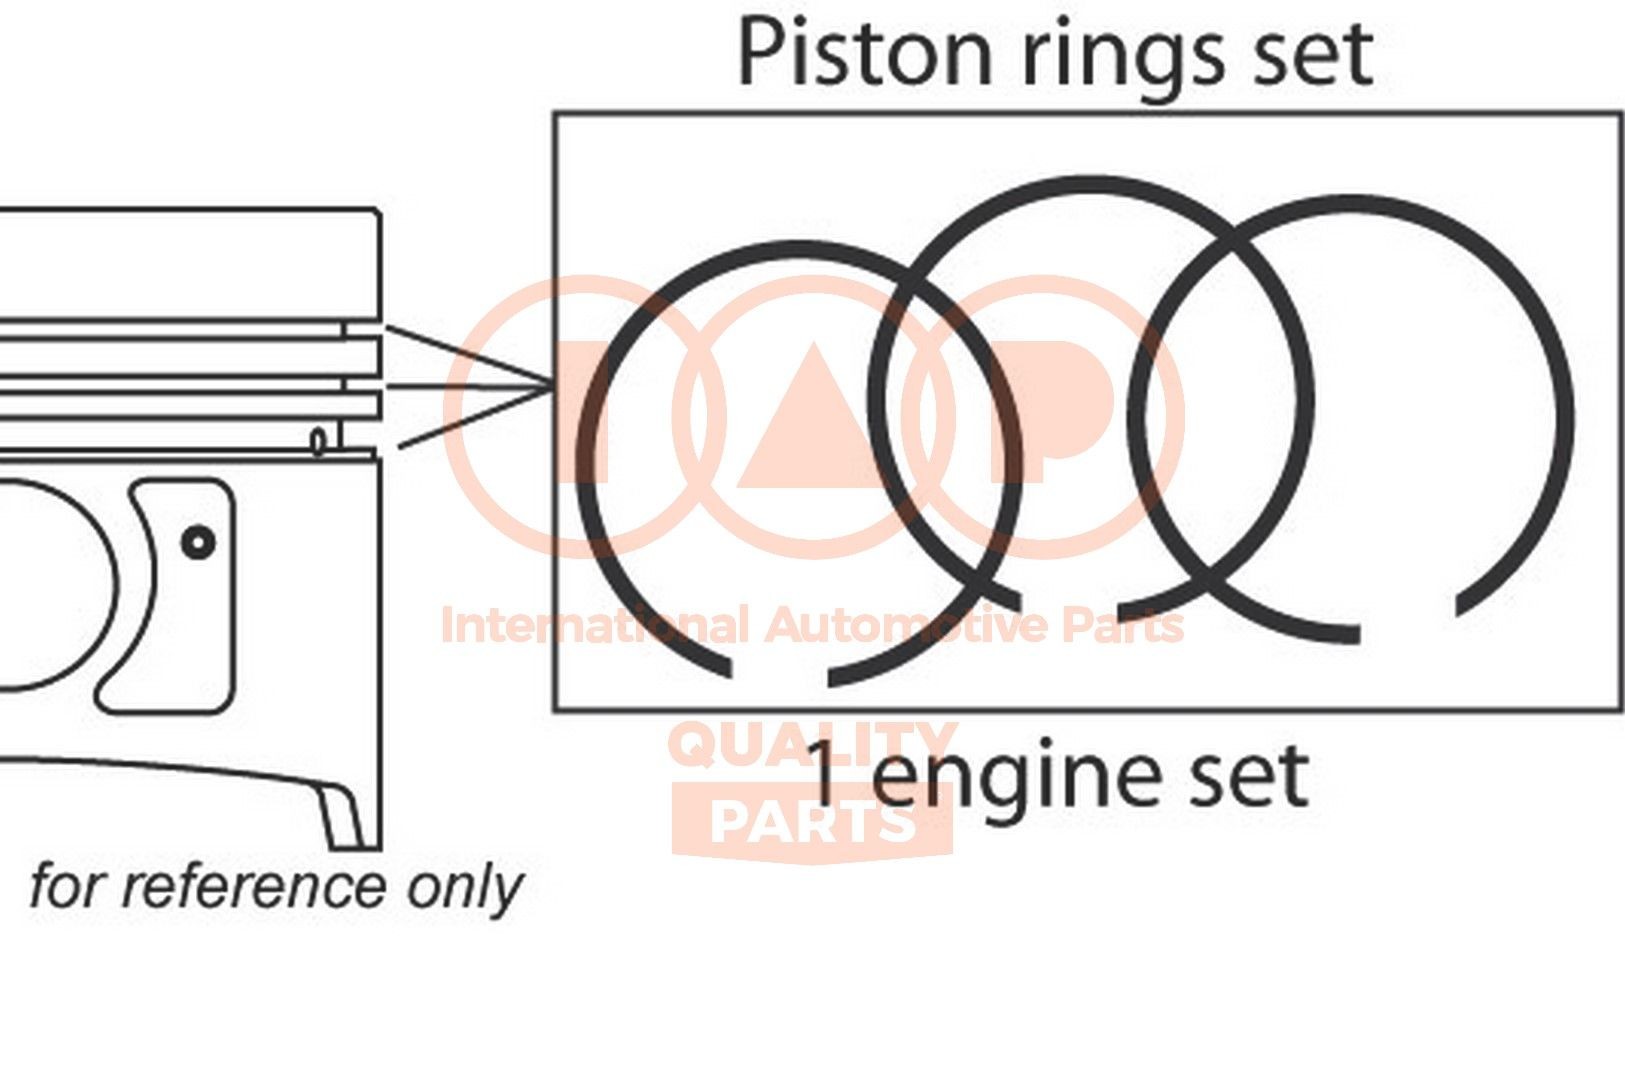 IAP QUALITY PARTS 102-06019 HONDA CIVIC 1999 Piston rings